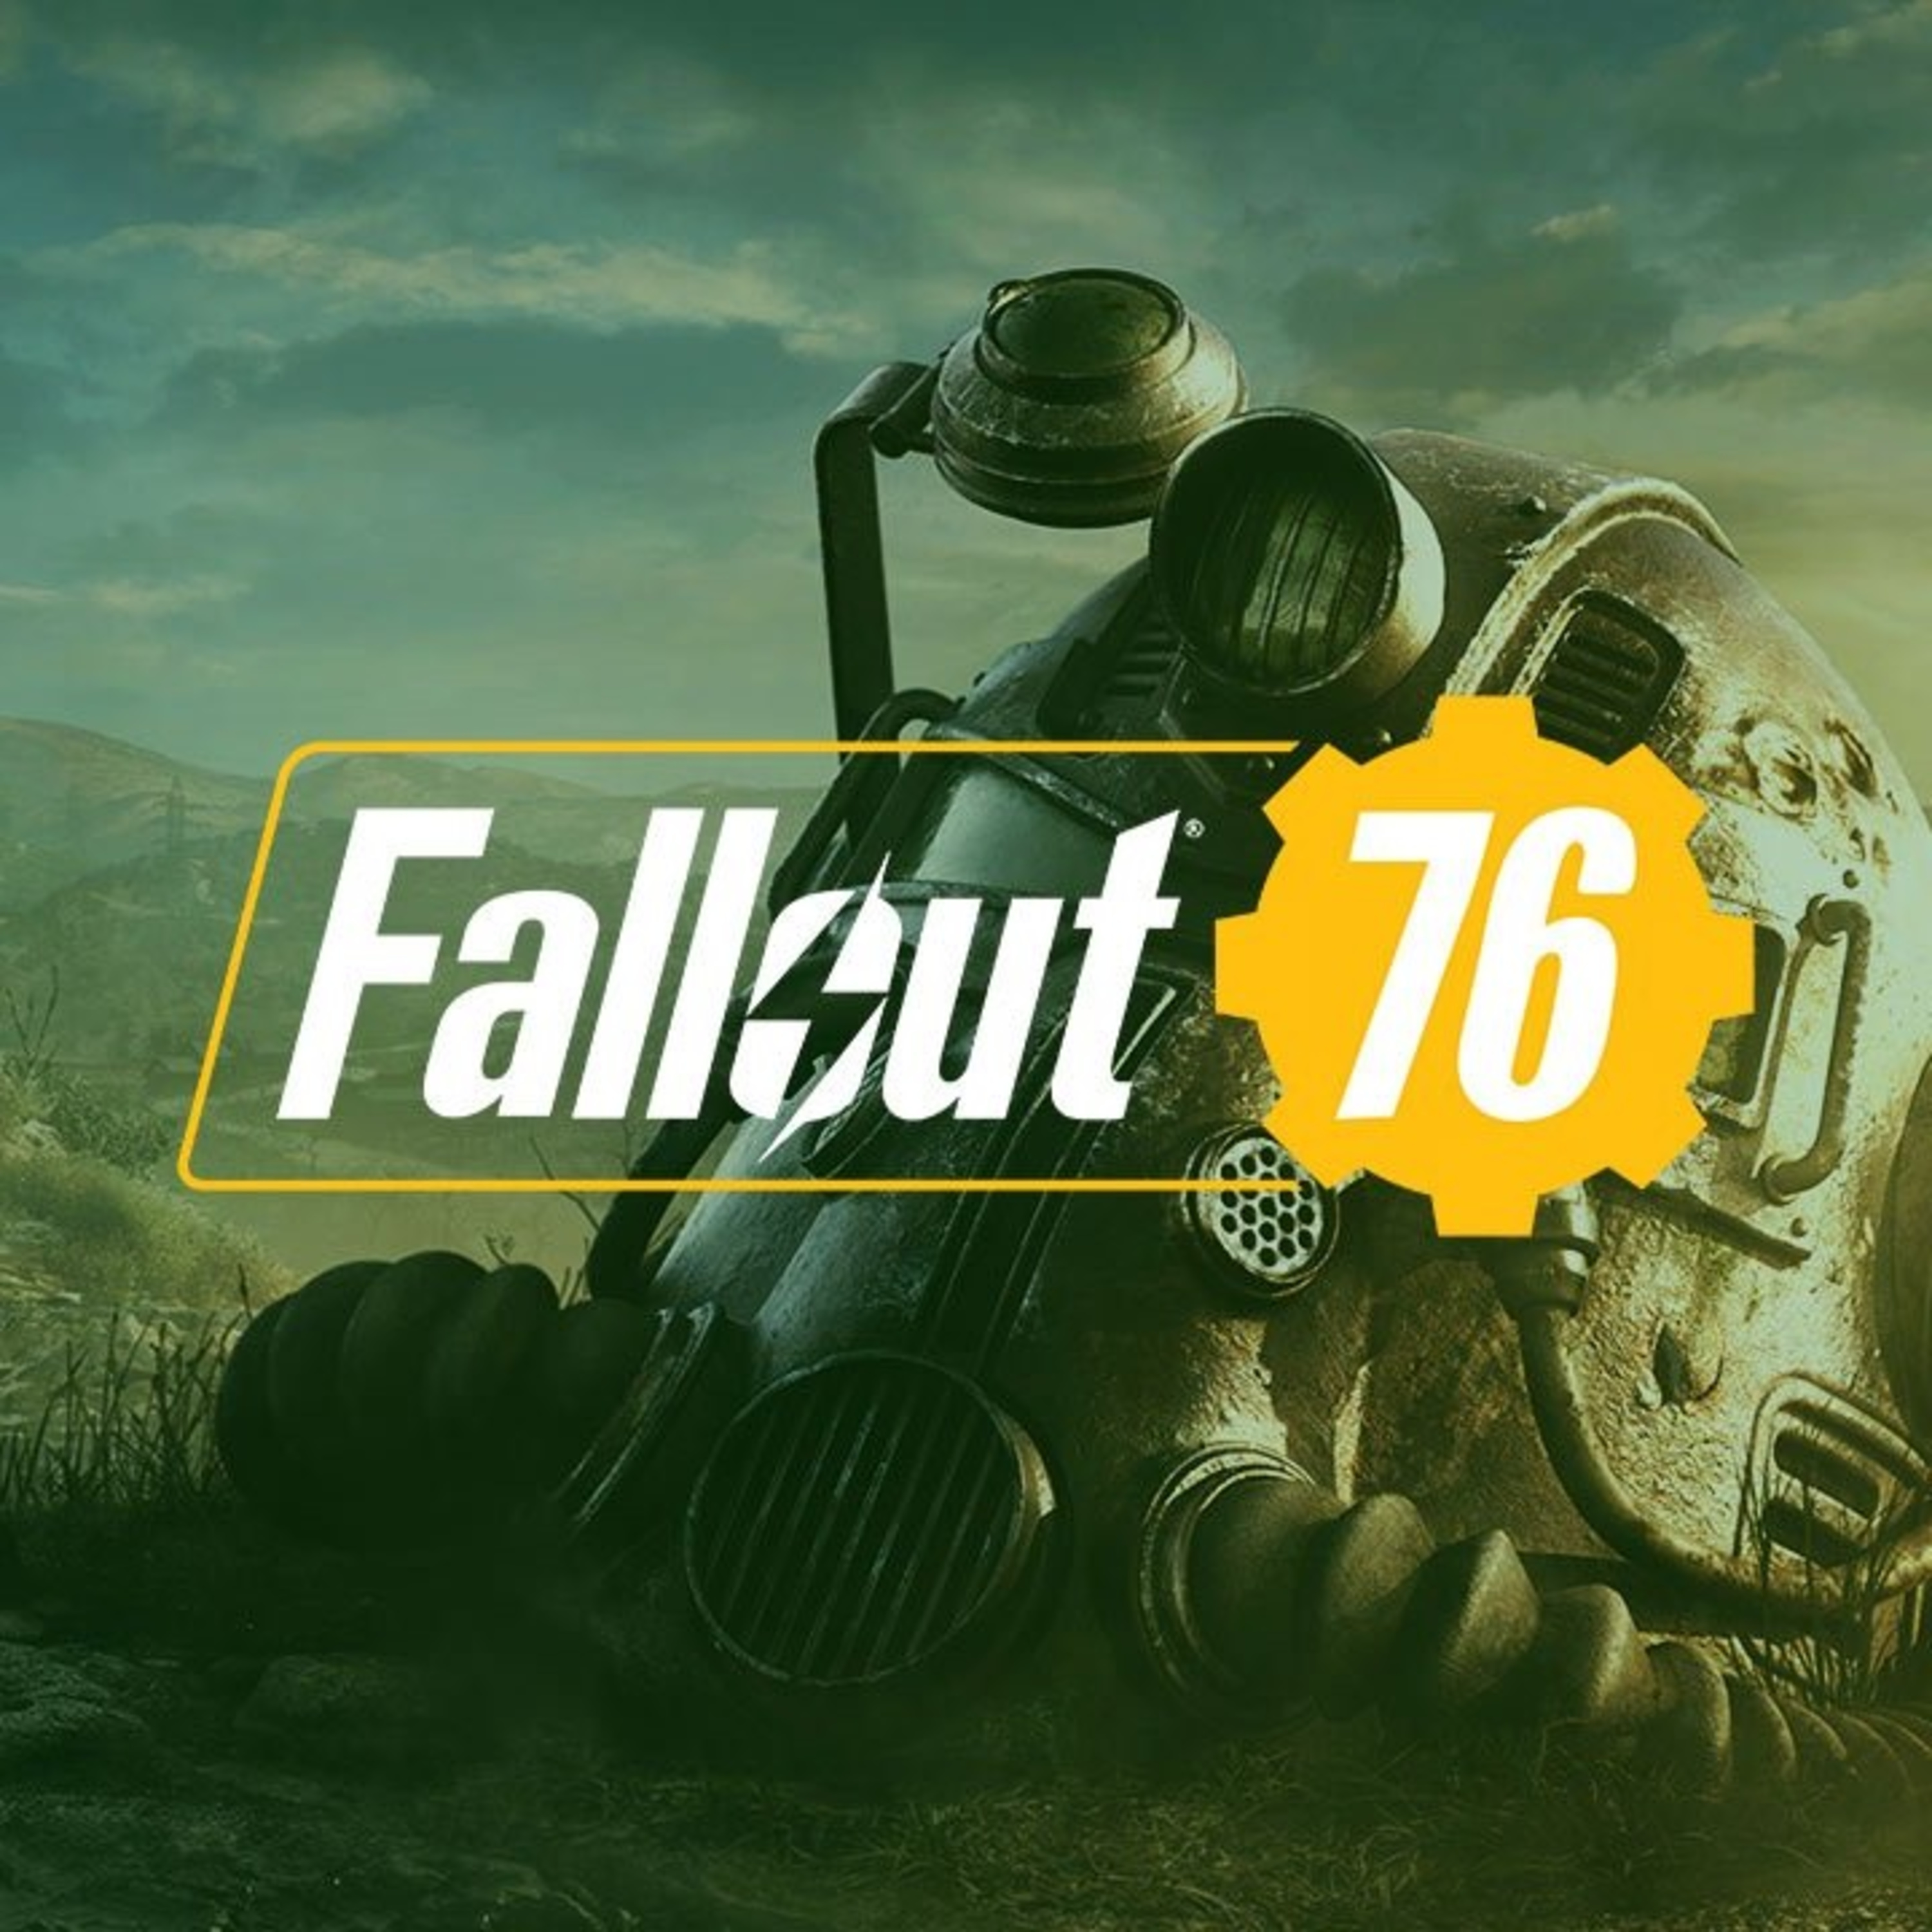 280 Fallout 76